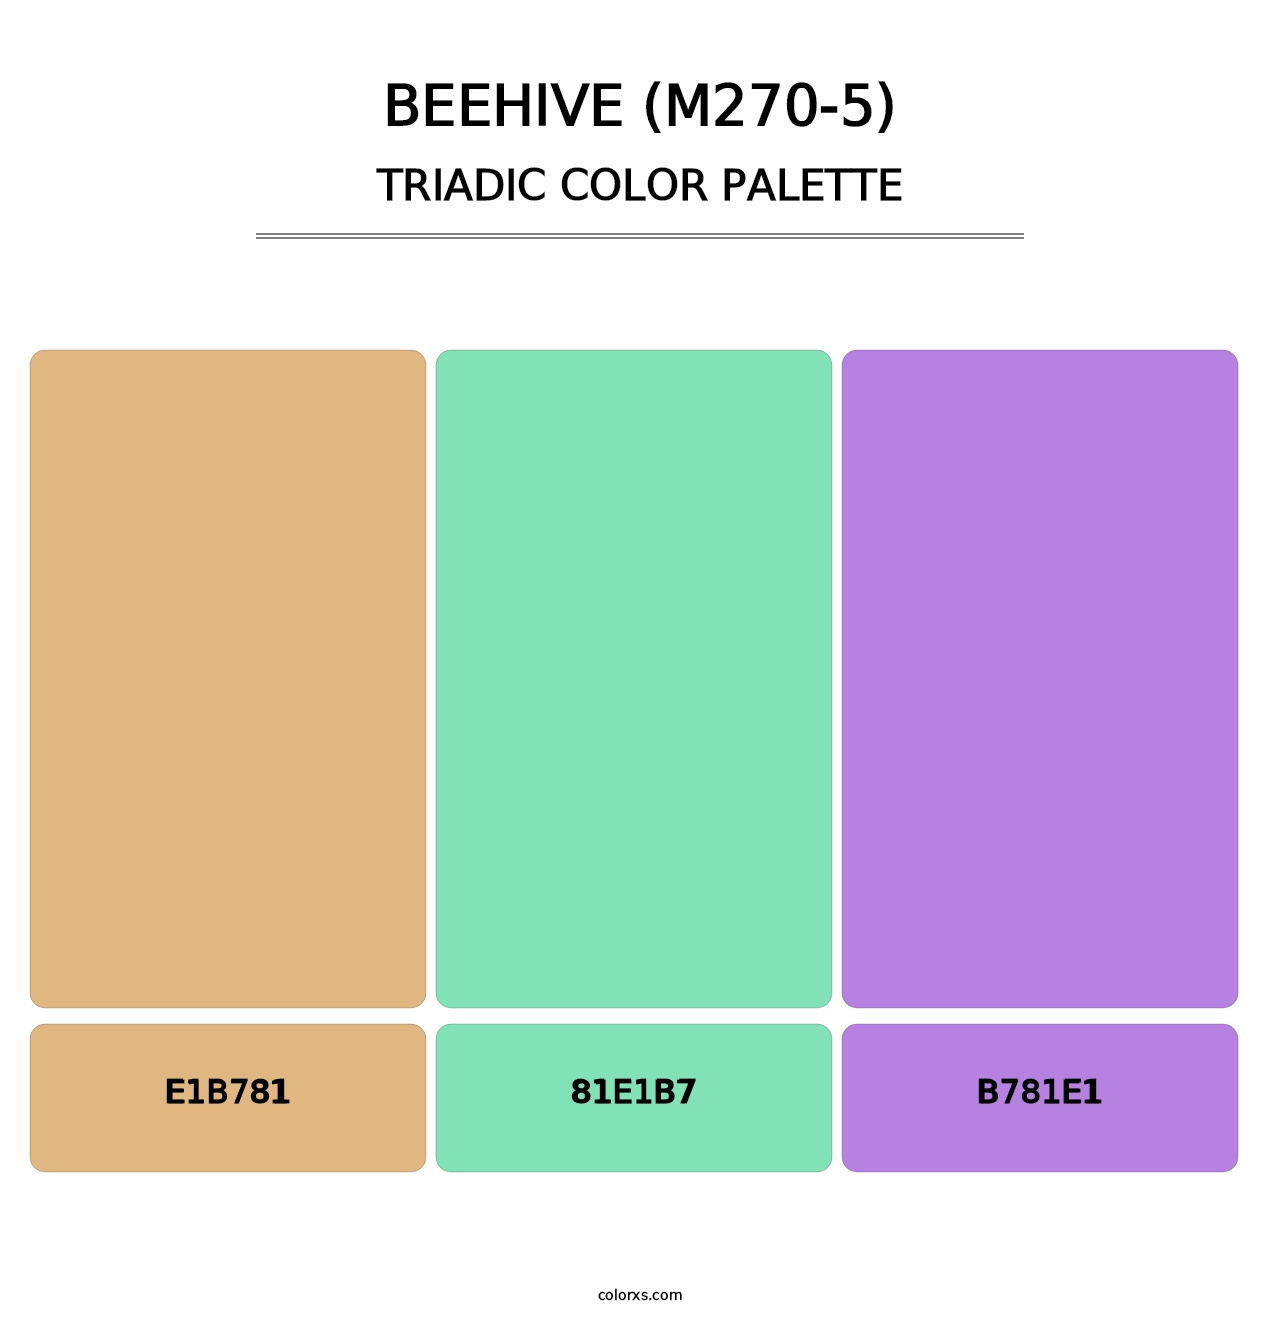 Beehive (M270-5) - Triadic Color Palette